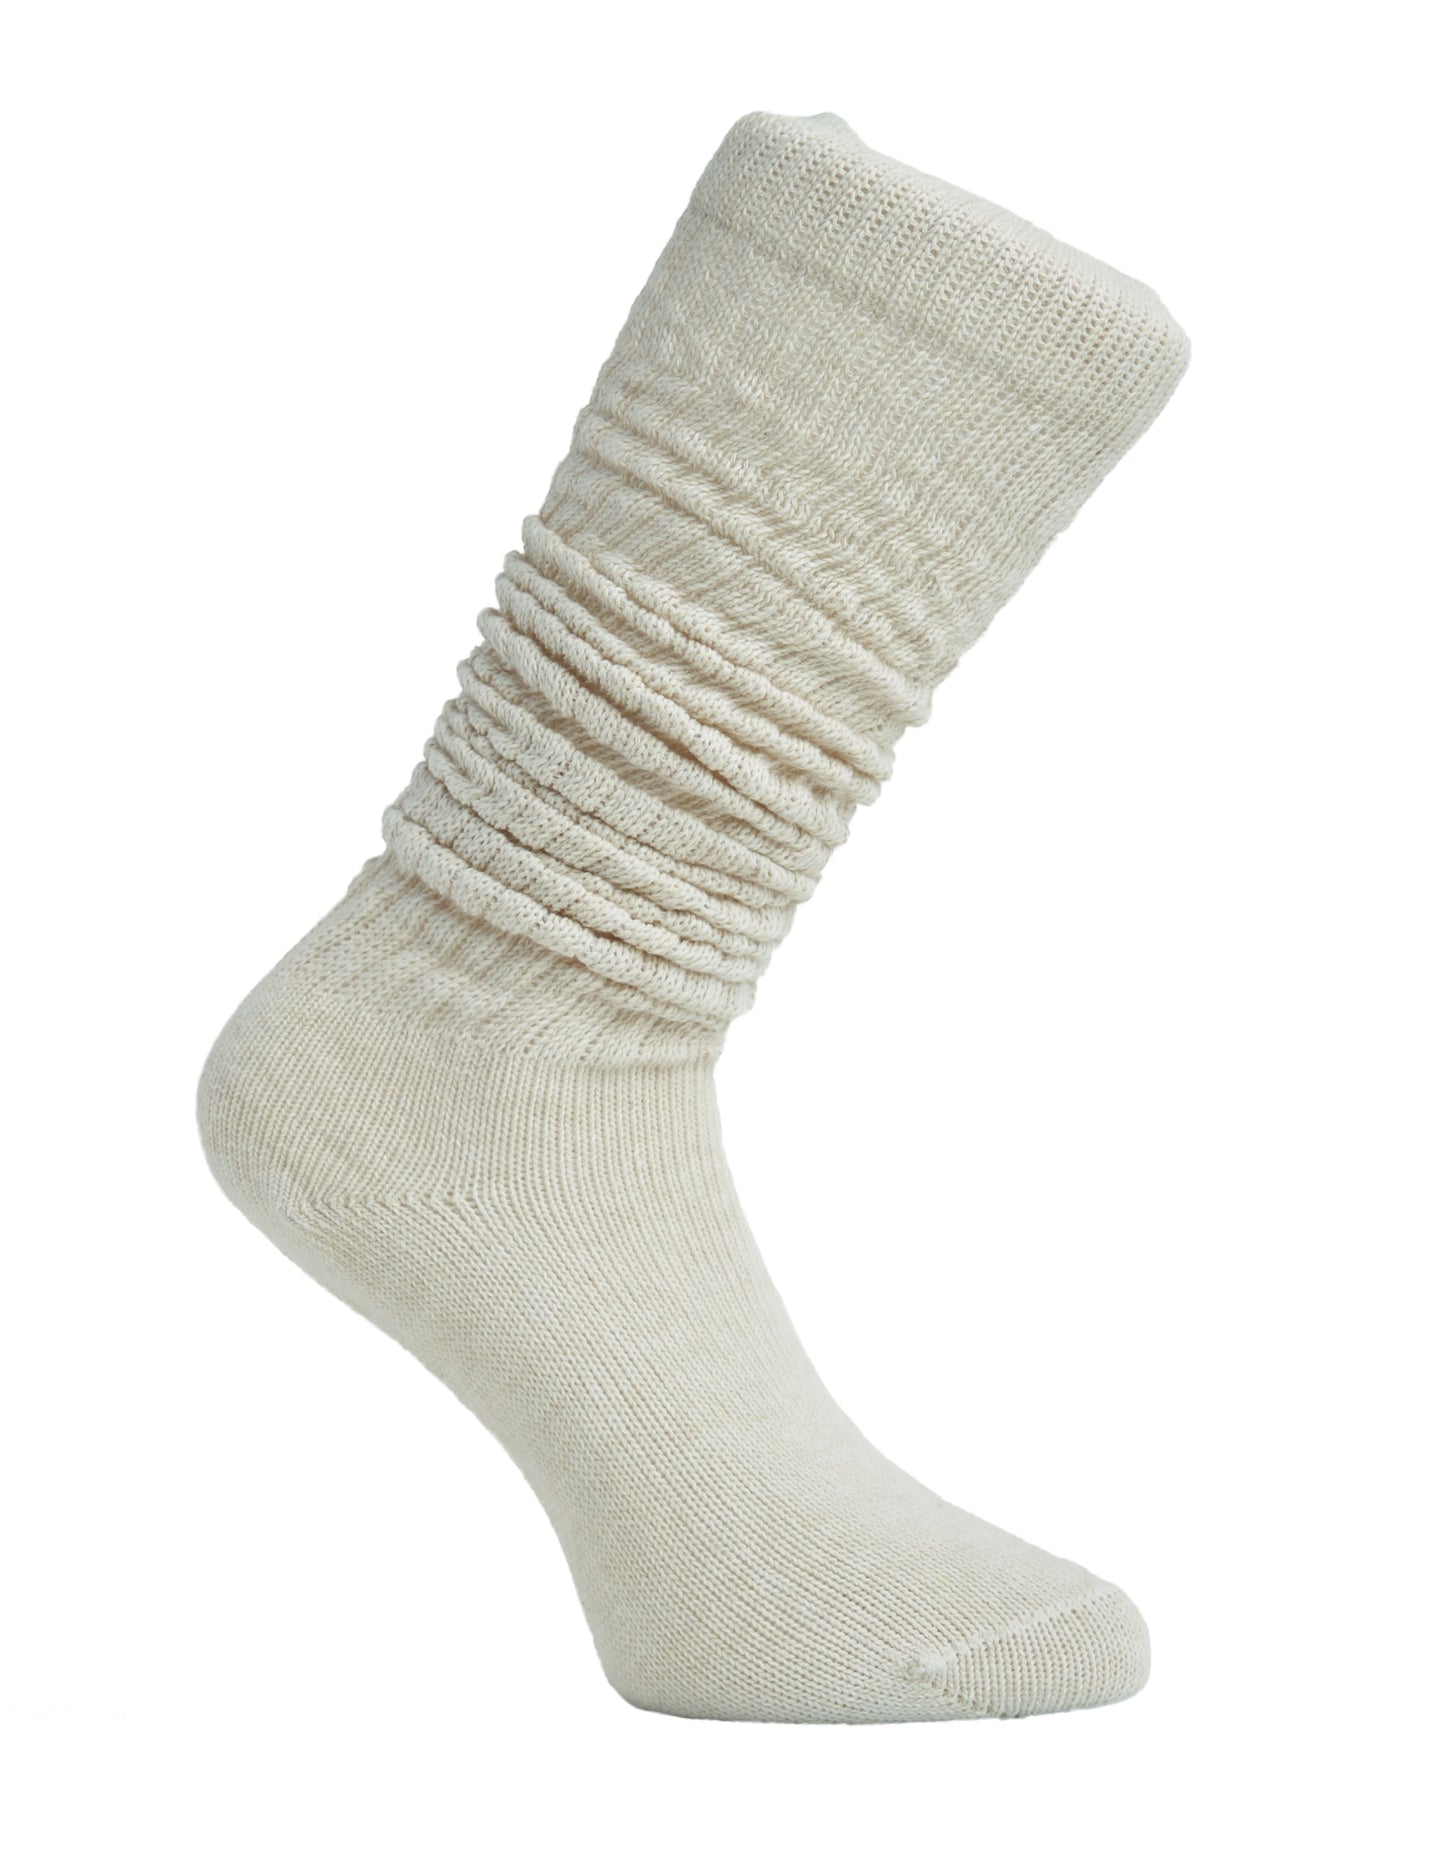 Simon de Winter Women's White Slouch Socks in Ivory Marle